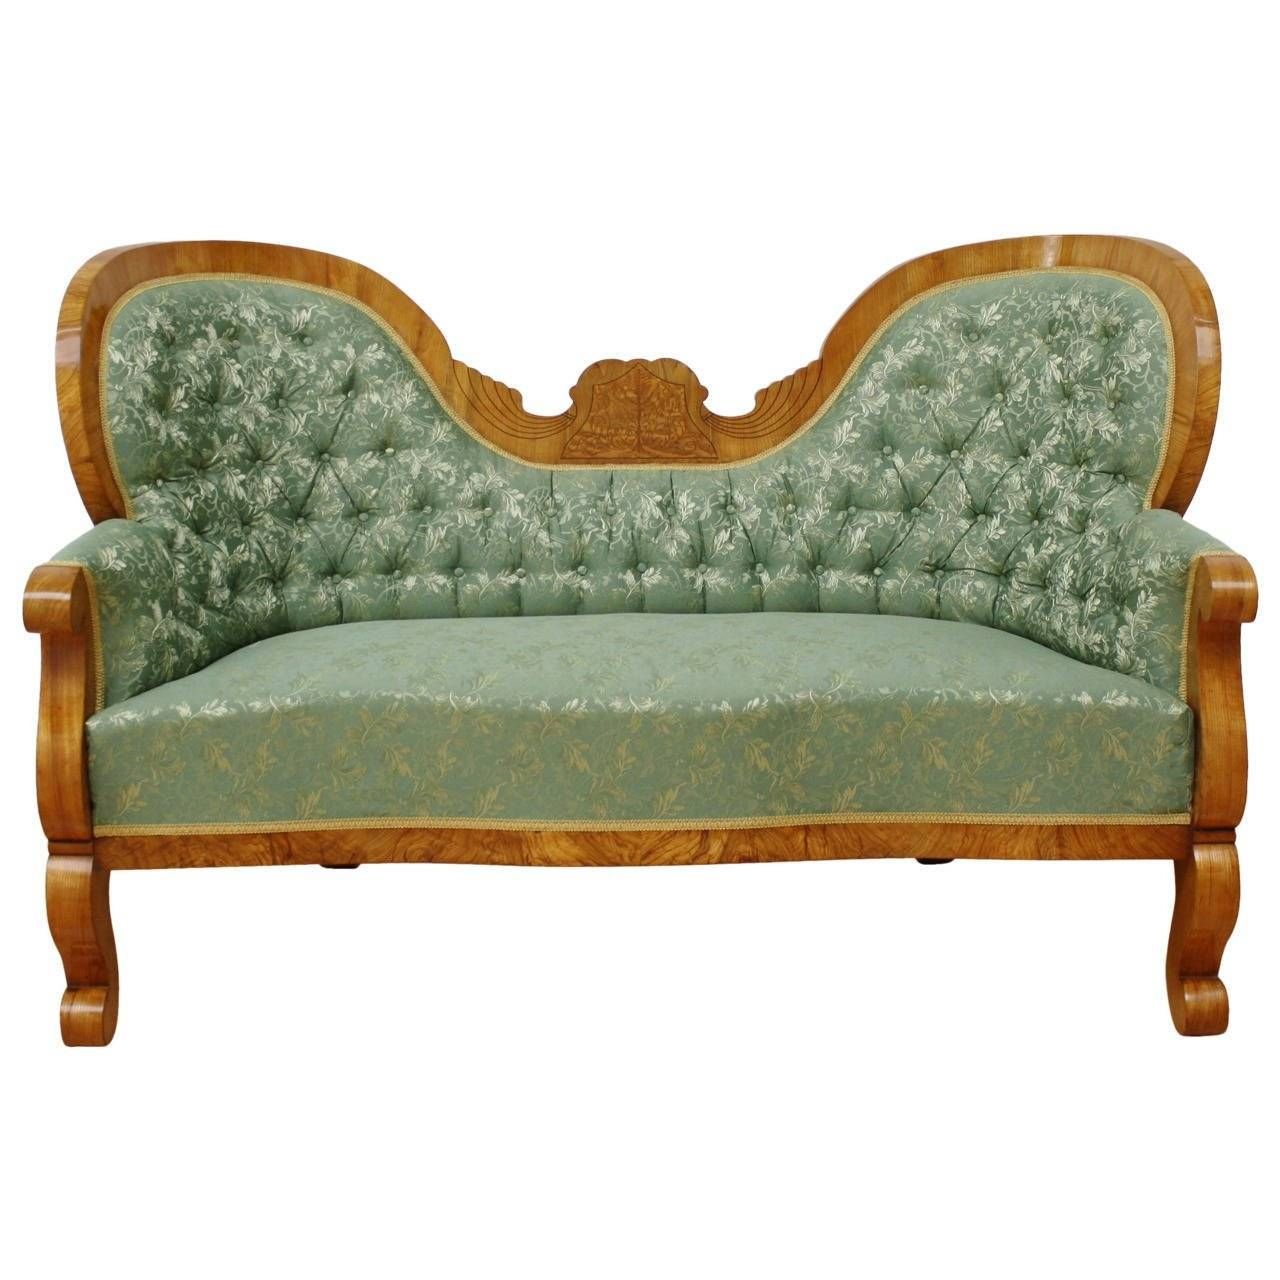 19th Century Austrian Biedermeier Sofa For Sale At 1stdibs Pertaining To Biedermeier Sofas (View 1 of 15)